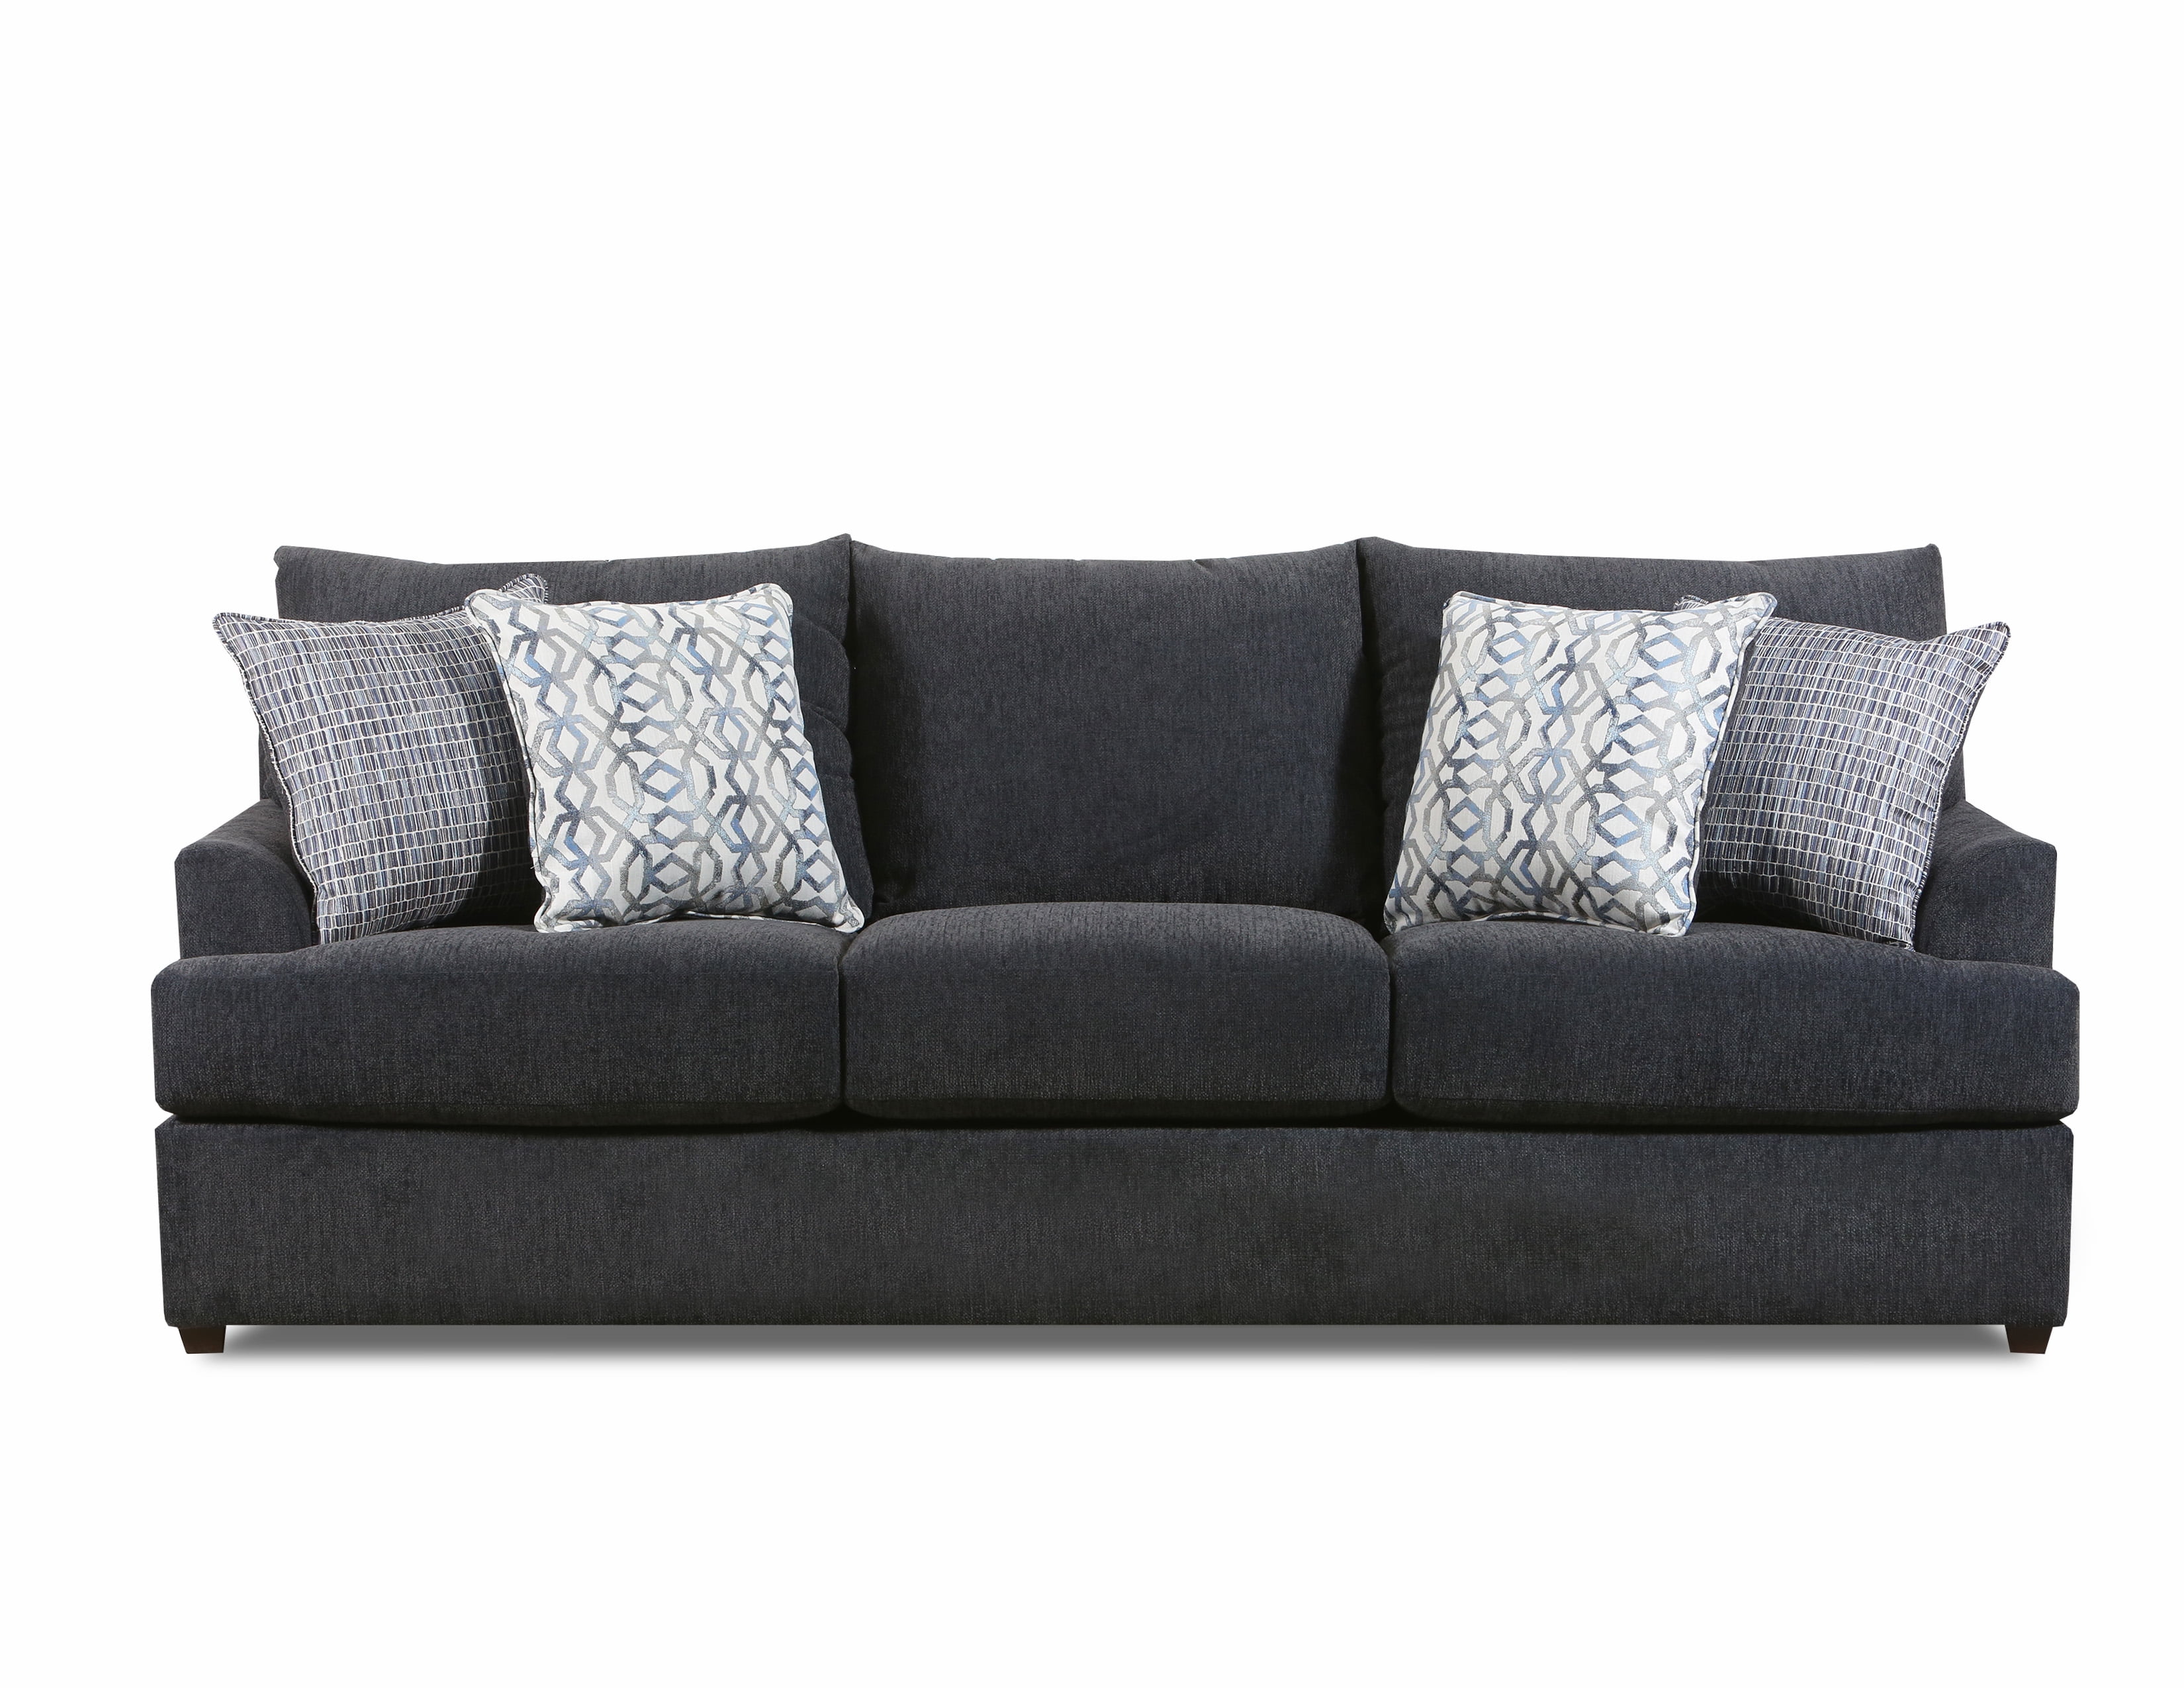 Lane Home Furnishings Surge Charcoal Sofa